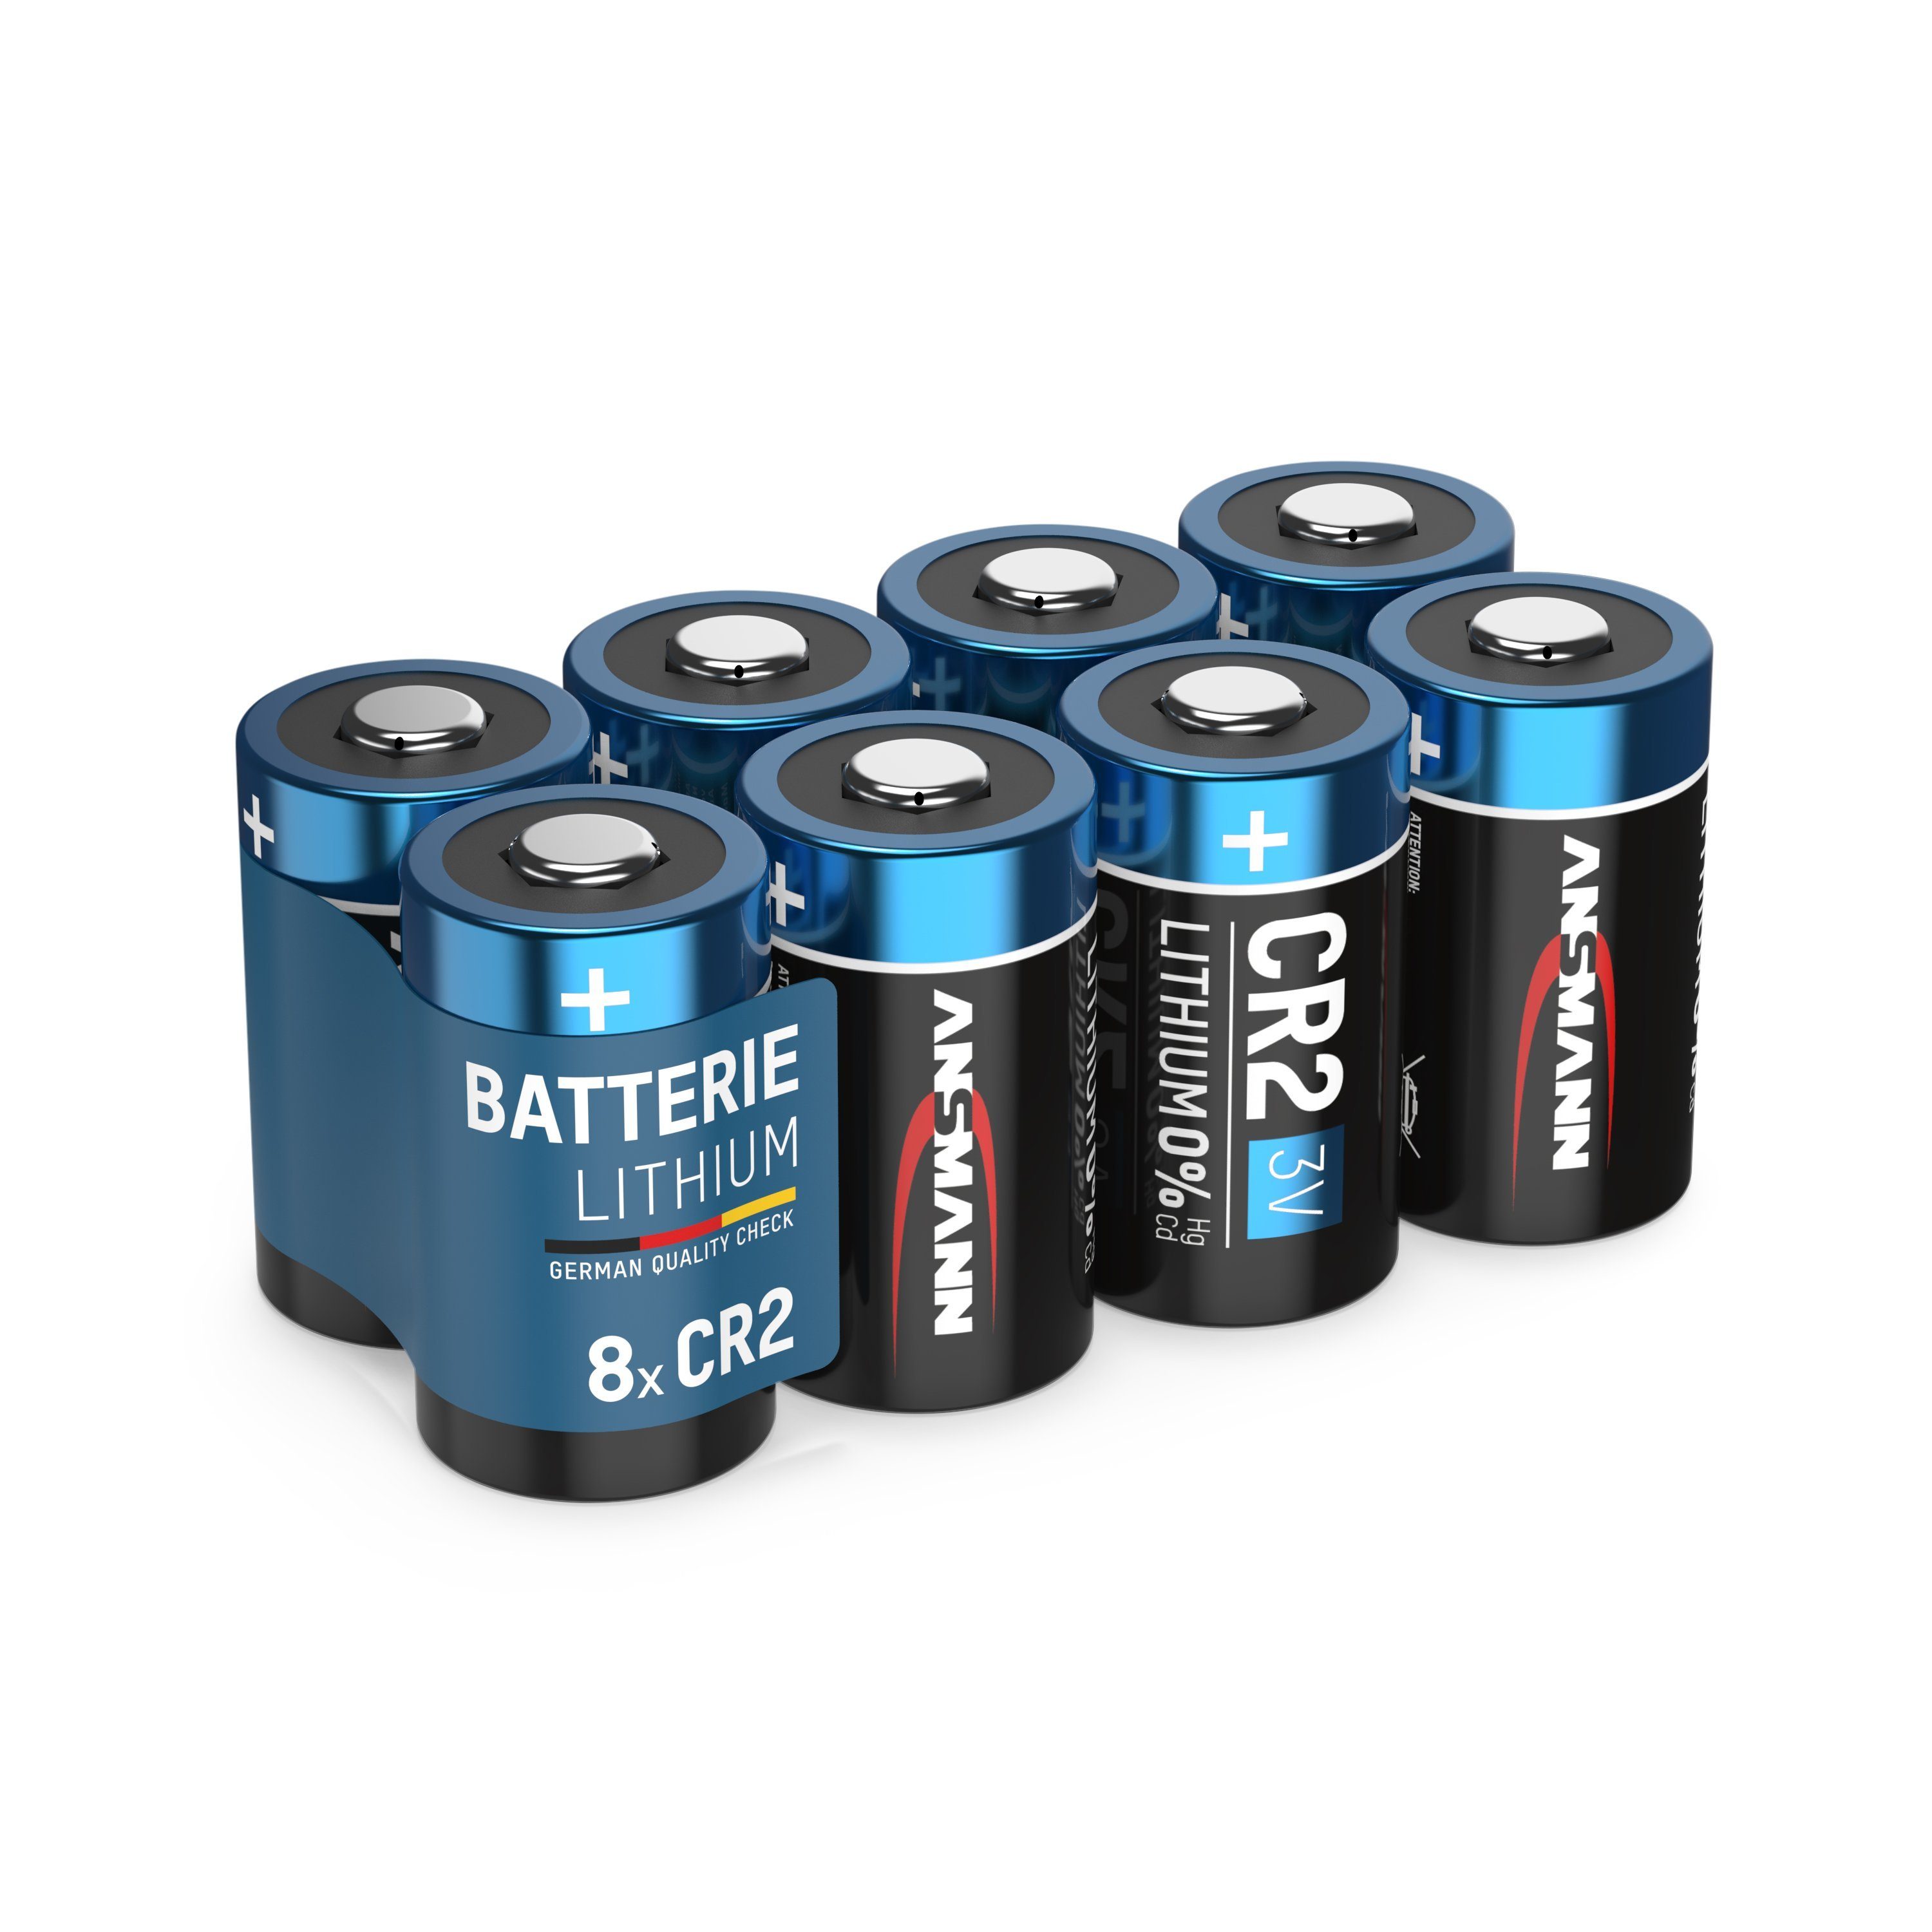 ANSMANN® 8x CR2 Lithium Batterie 3V - Hochleistungsbatterie (8 Stück) Batterie